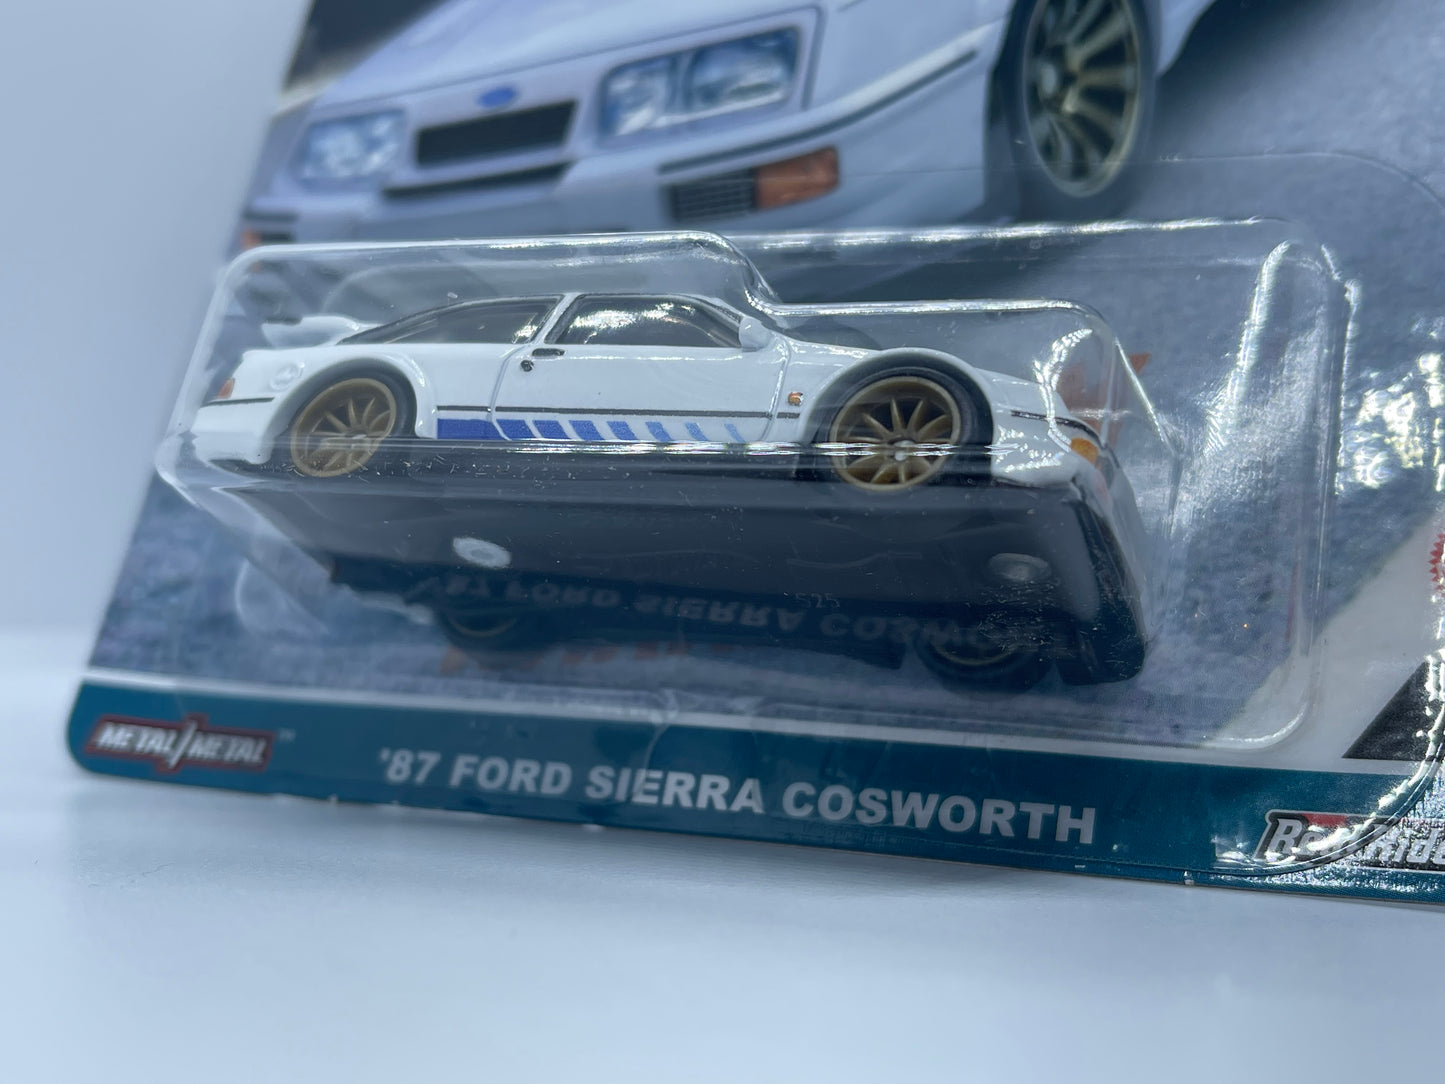 Hot Wheels Premium - ‘87 Ford Sierra Cosworth - Canyon Warriors